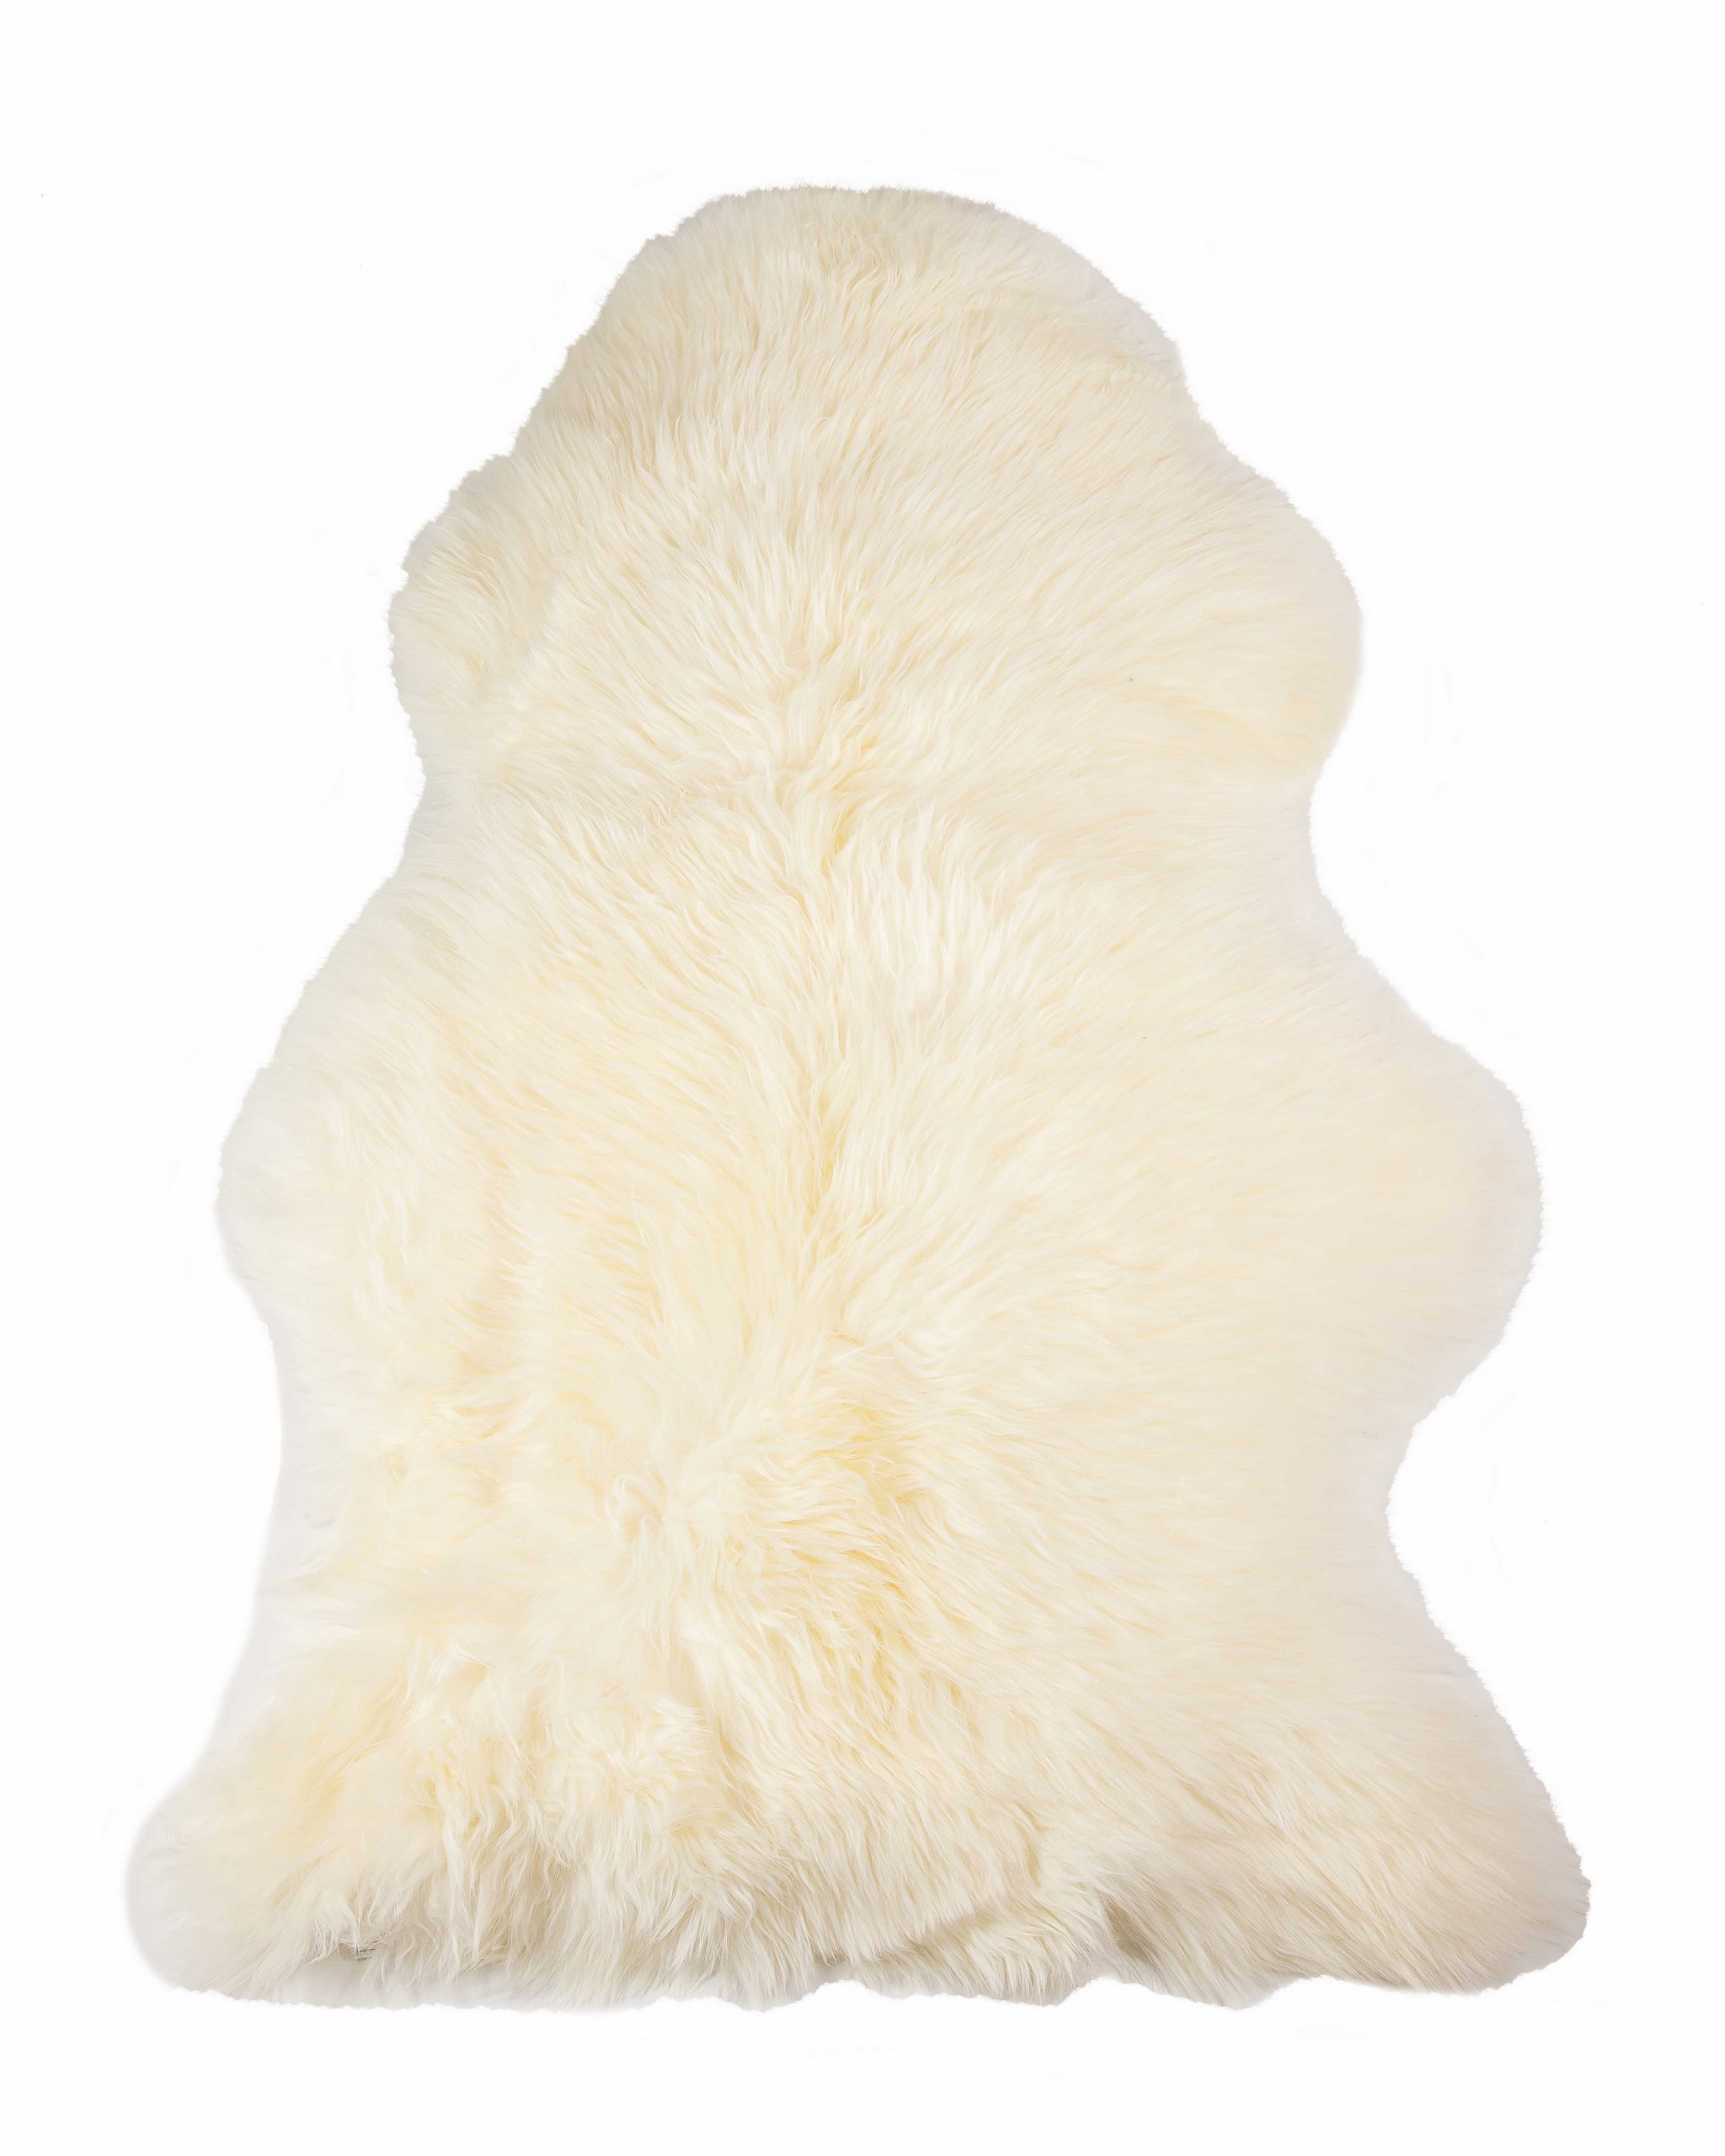 2' X 3' Ivory New Zealand Natural Sheepskin Rug-376919-1